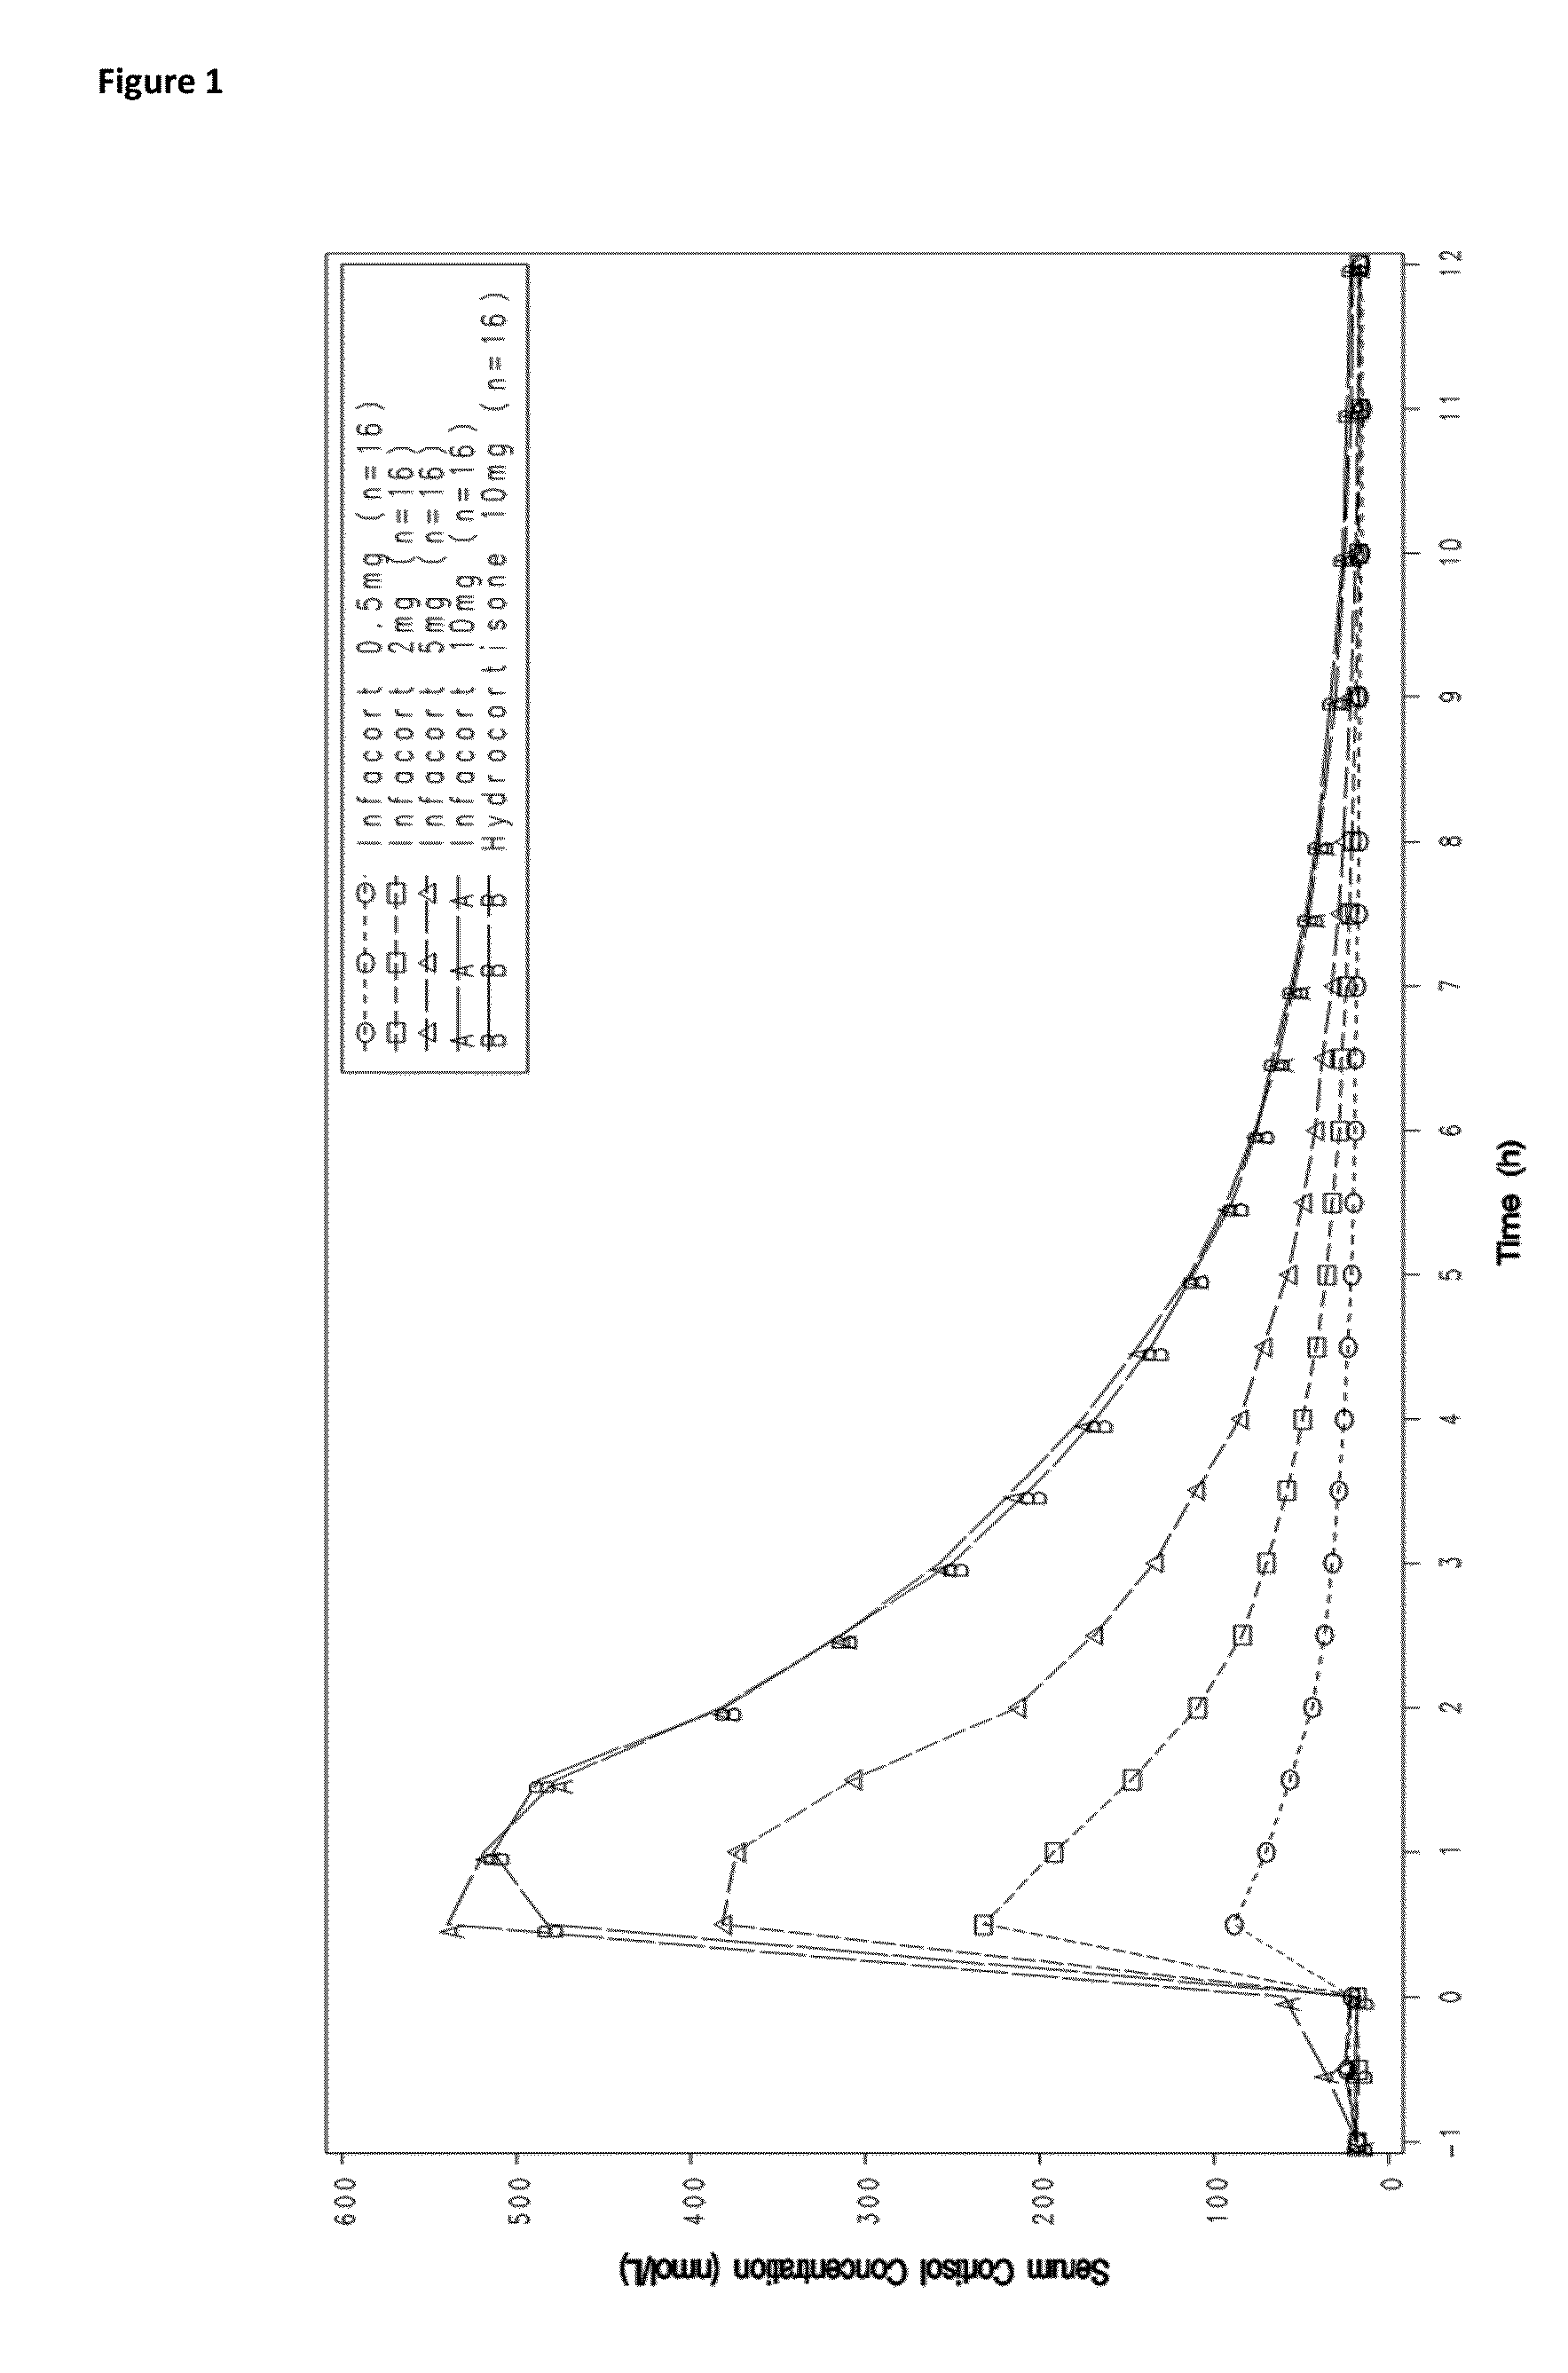 Composition comprising hydrocortisone